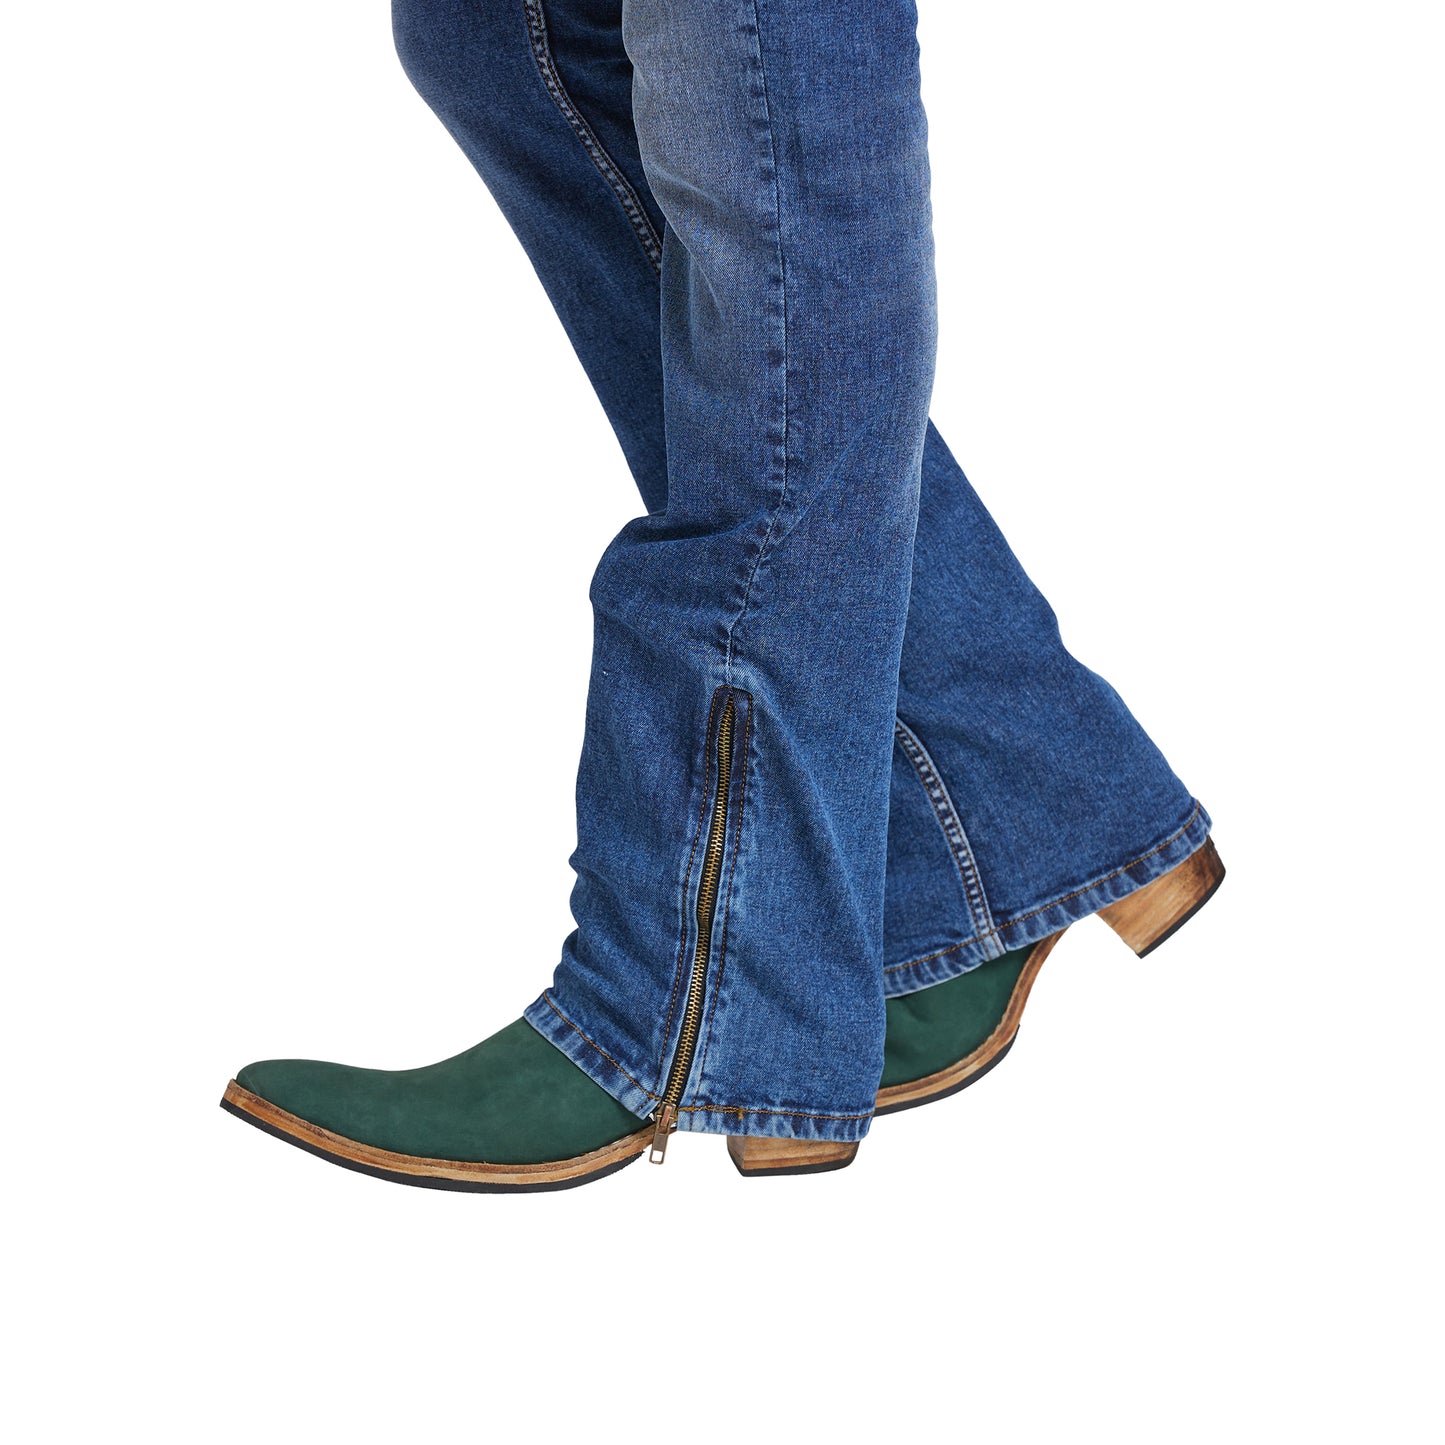 Mode De Base Mens's Casual  Slim Fit Basic Blue Fadded Bootcut Jeans With Zipper Bottom (Basic Blue)